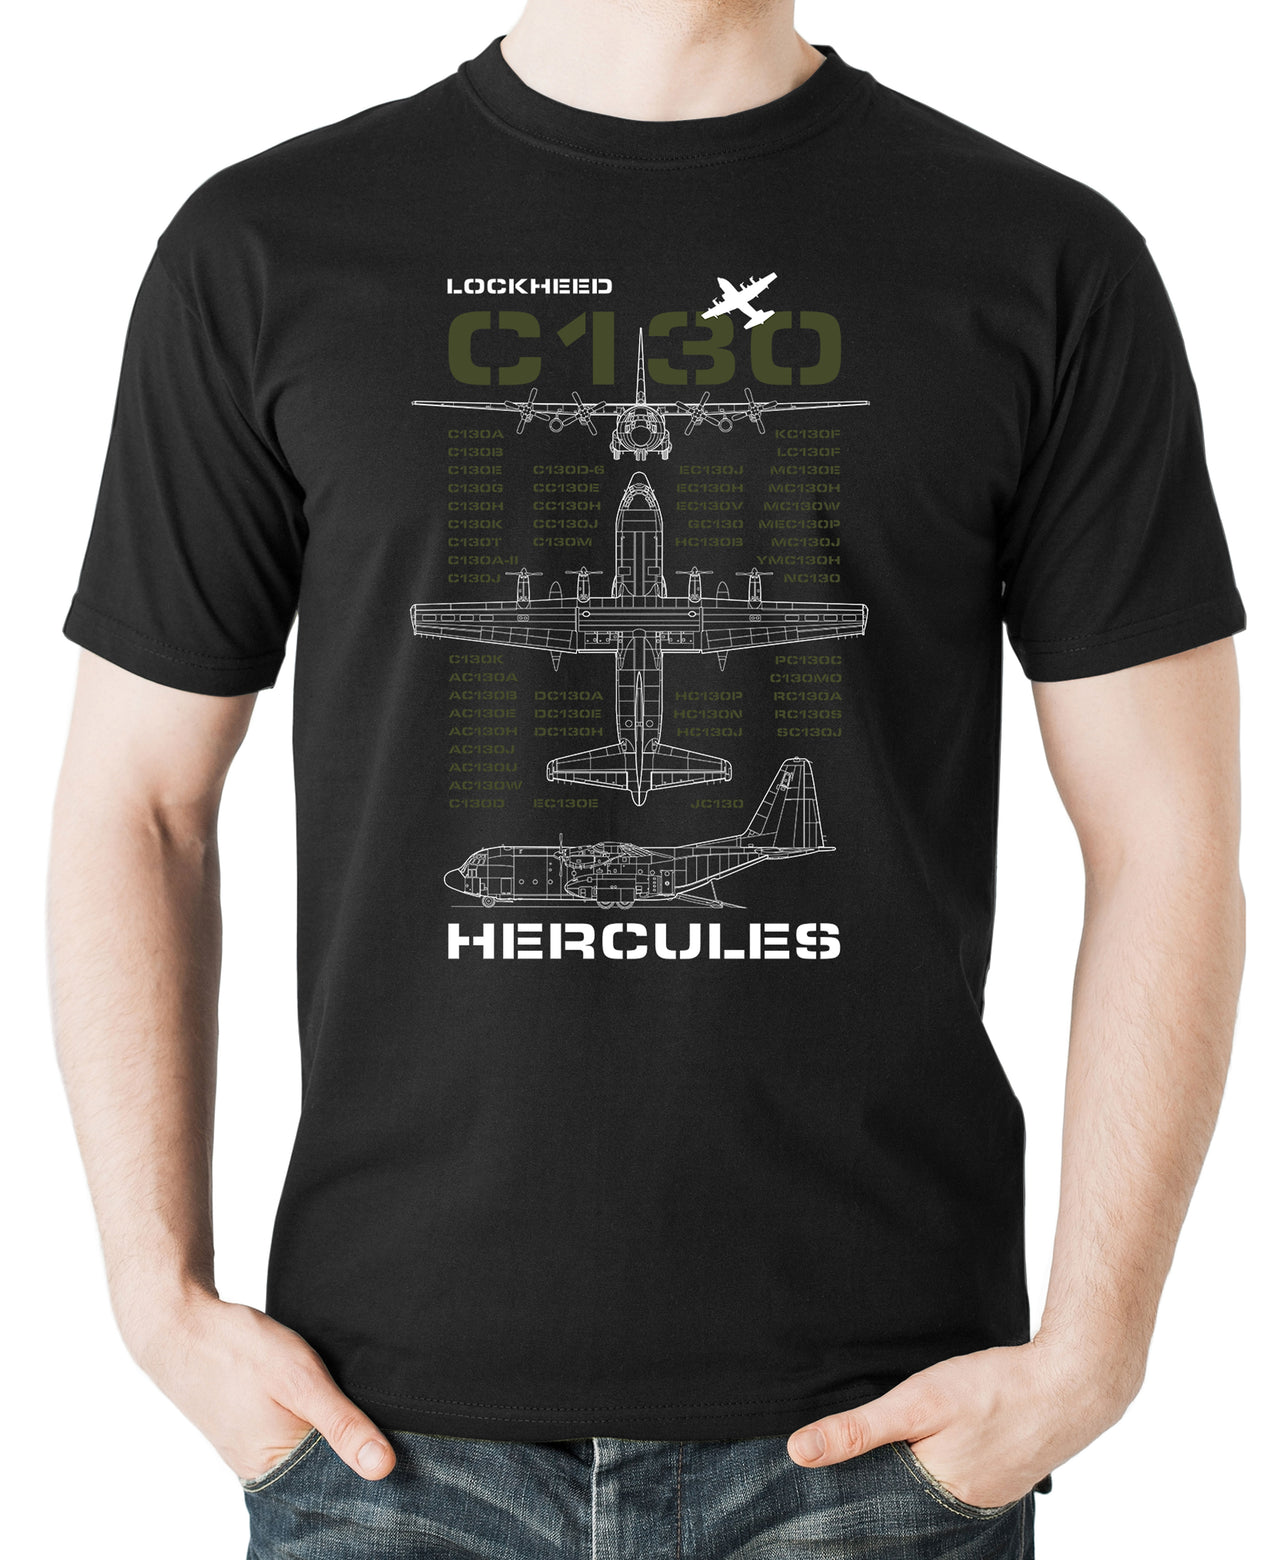 Lockheed C-130 Hercules - Tshirt